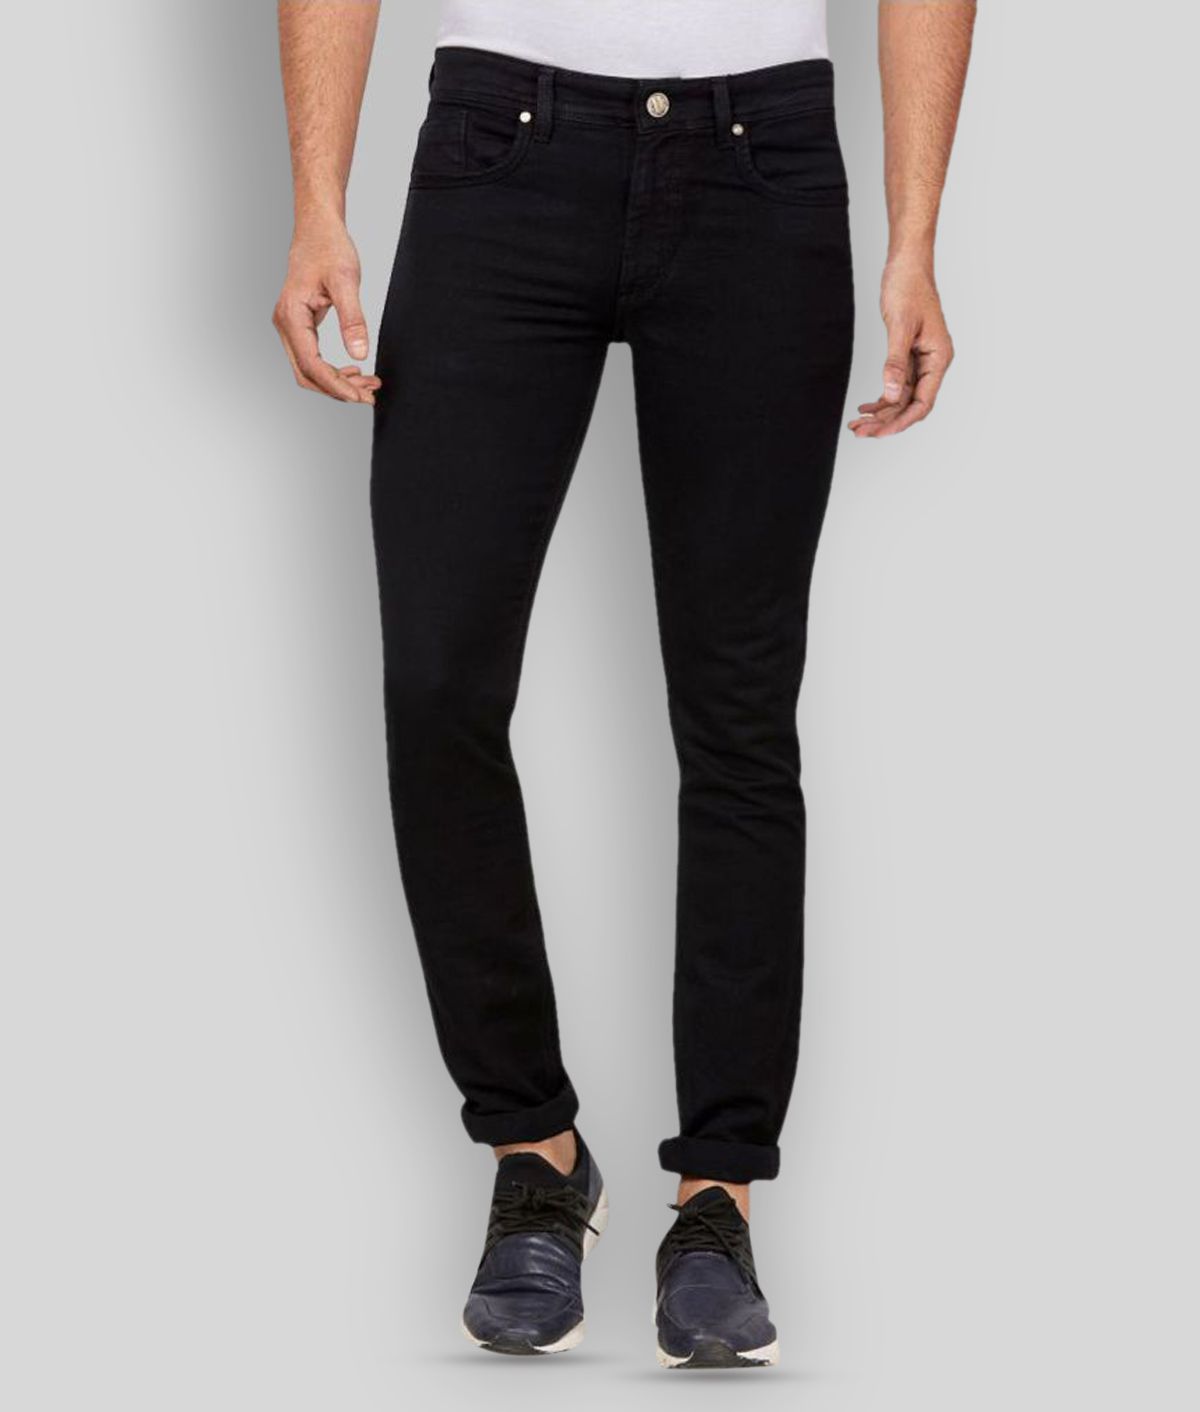 HJ HASASI - Black Cotton Blend Slim Fit Men's Jeans ( Pack of 1 )